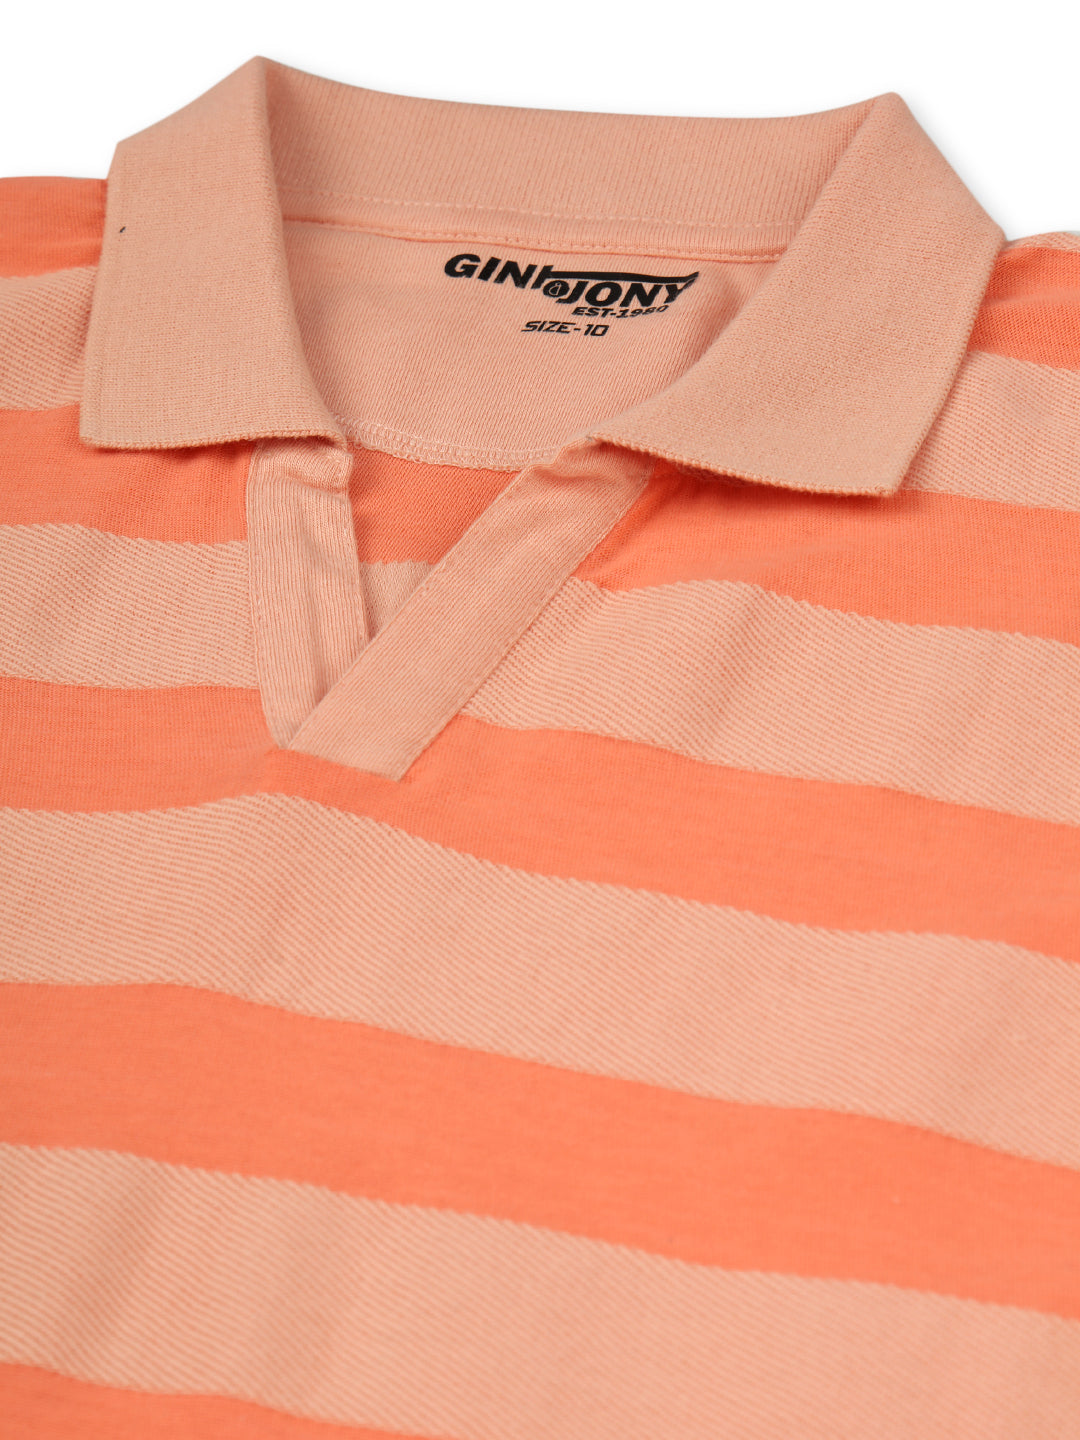 Boys Coral Cotton Stripes Polo T-Shirt